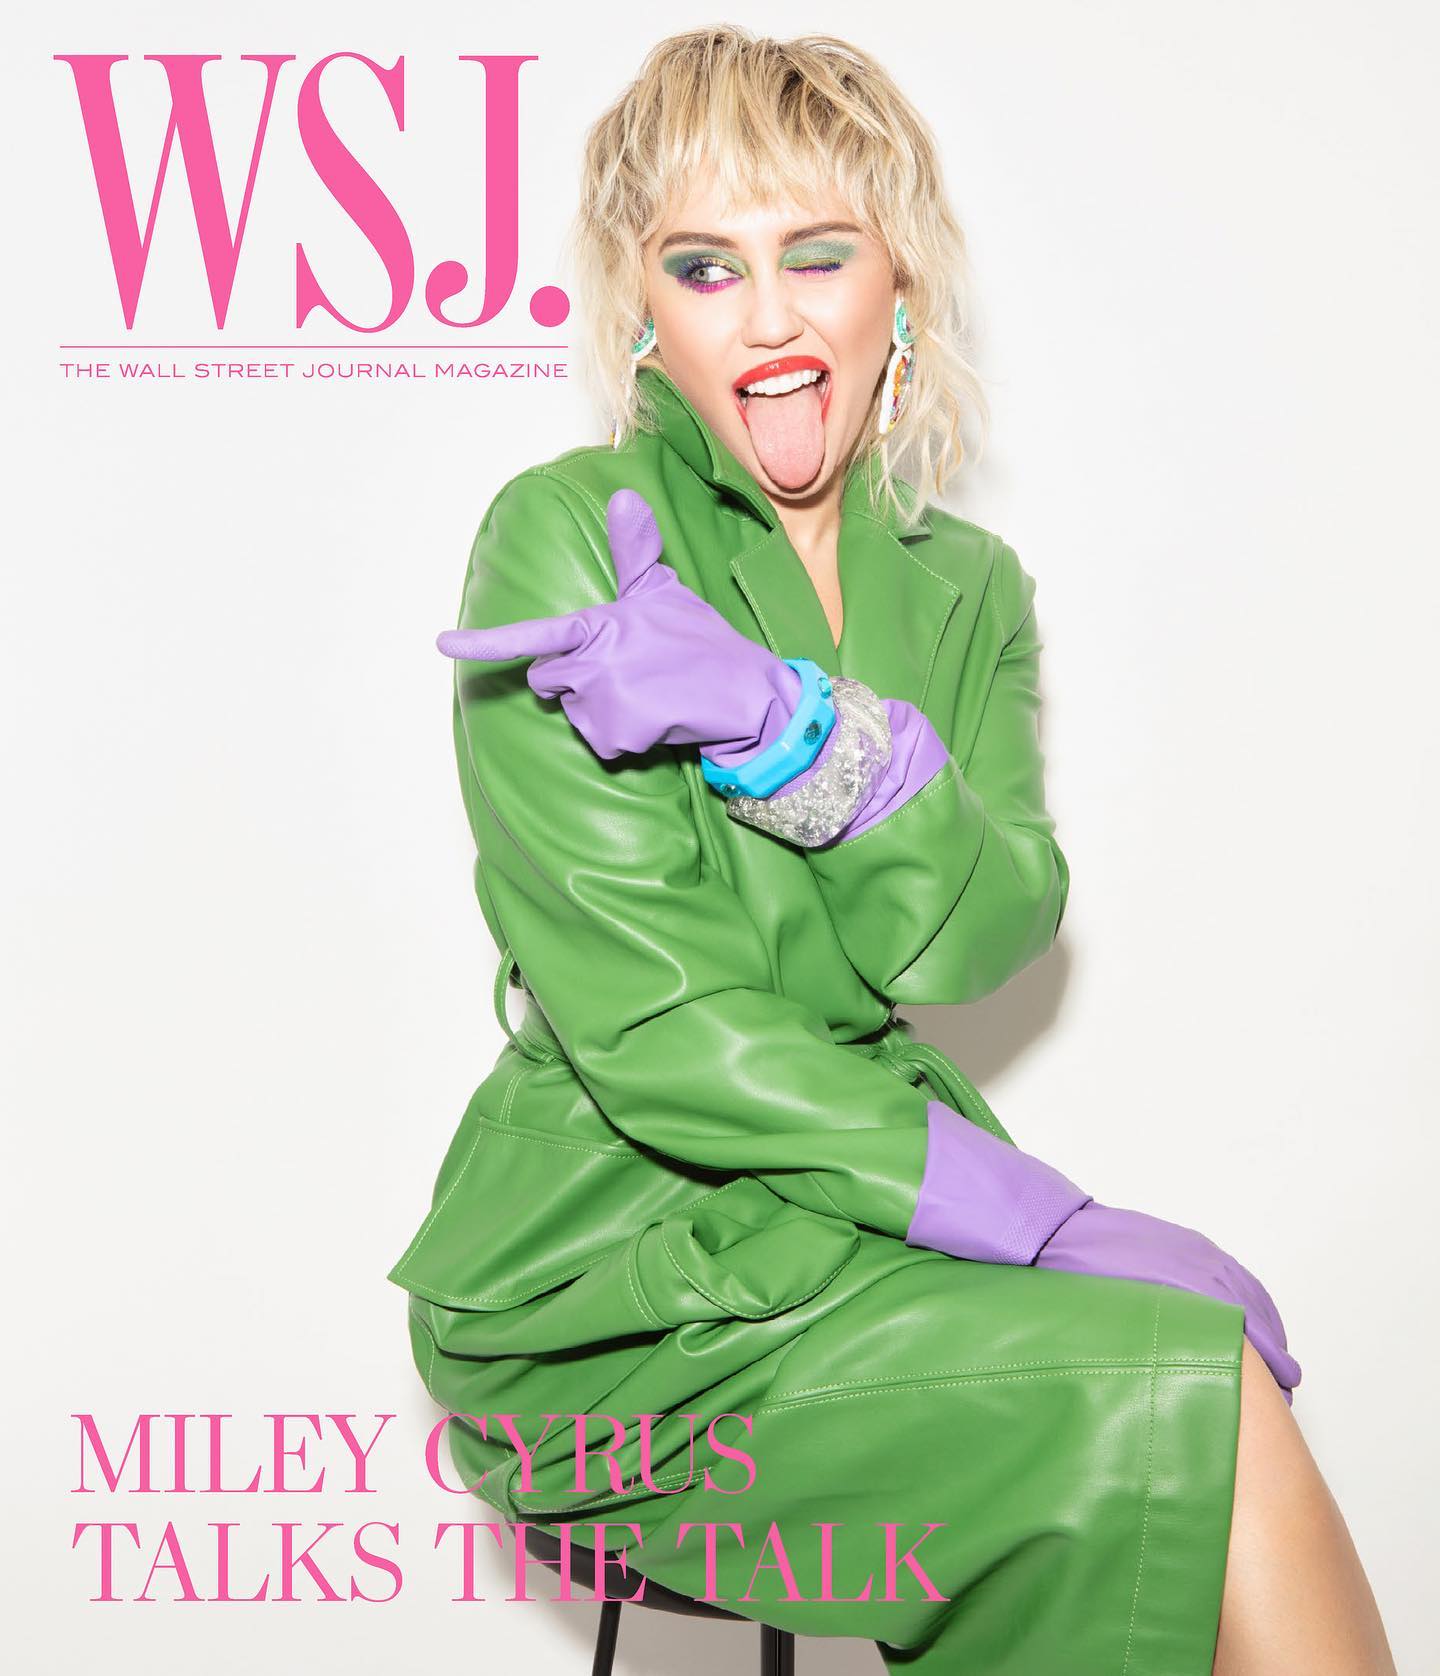 Fotos n°16 : Miley Cyrus siendo raro para WSJ!